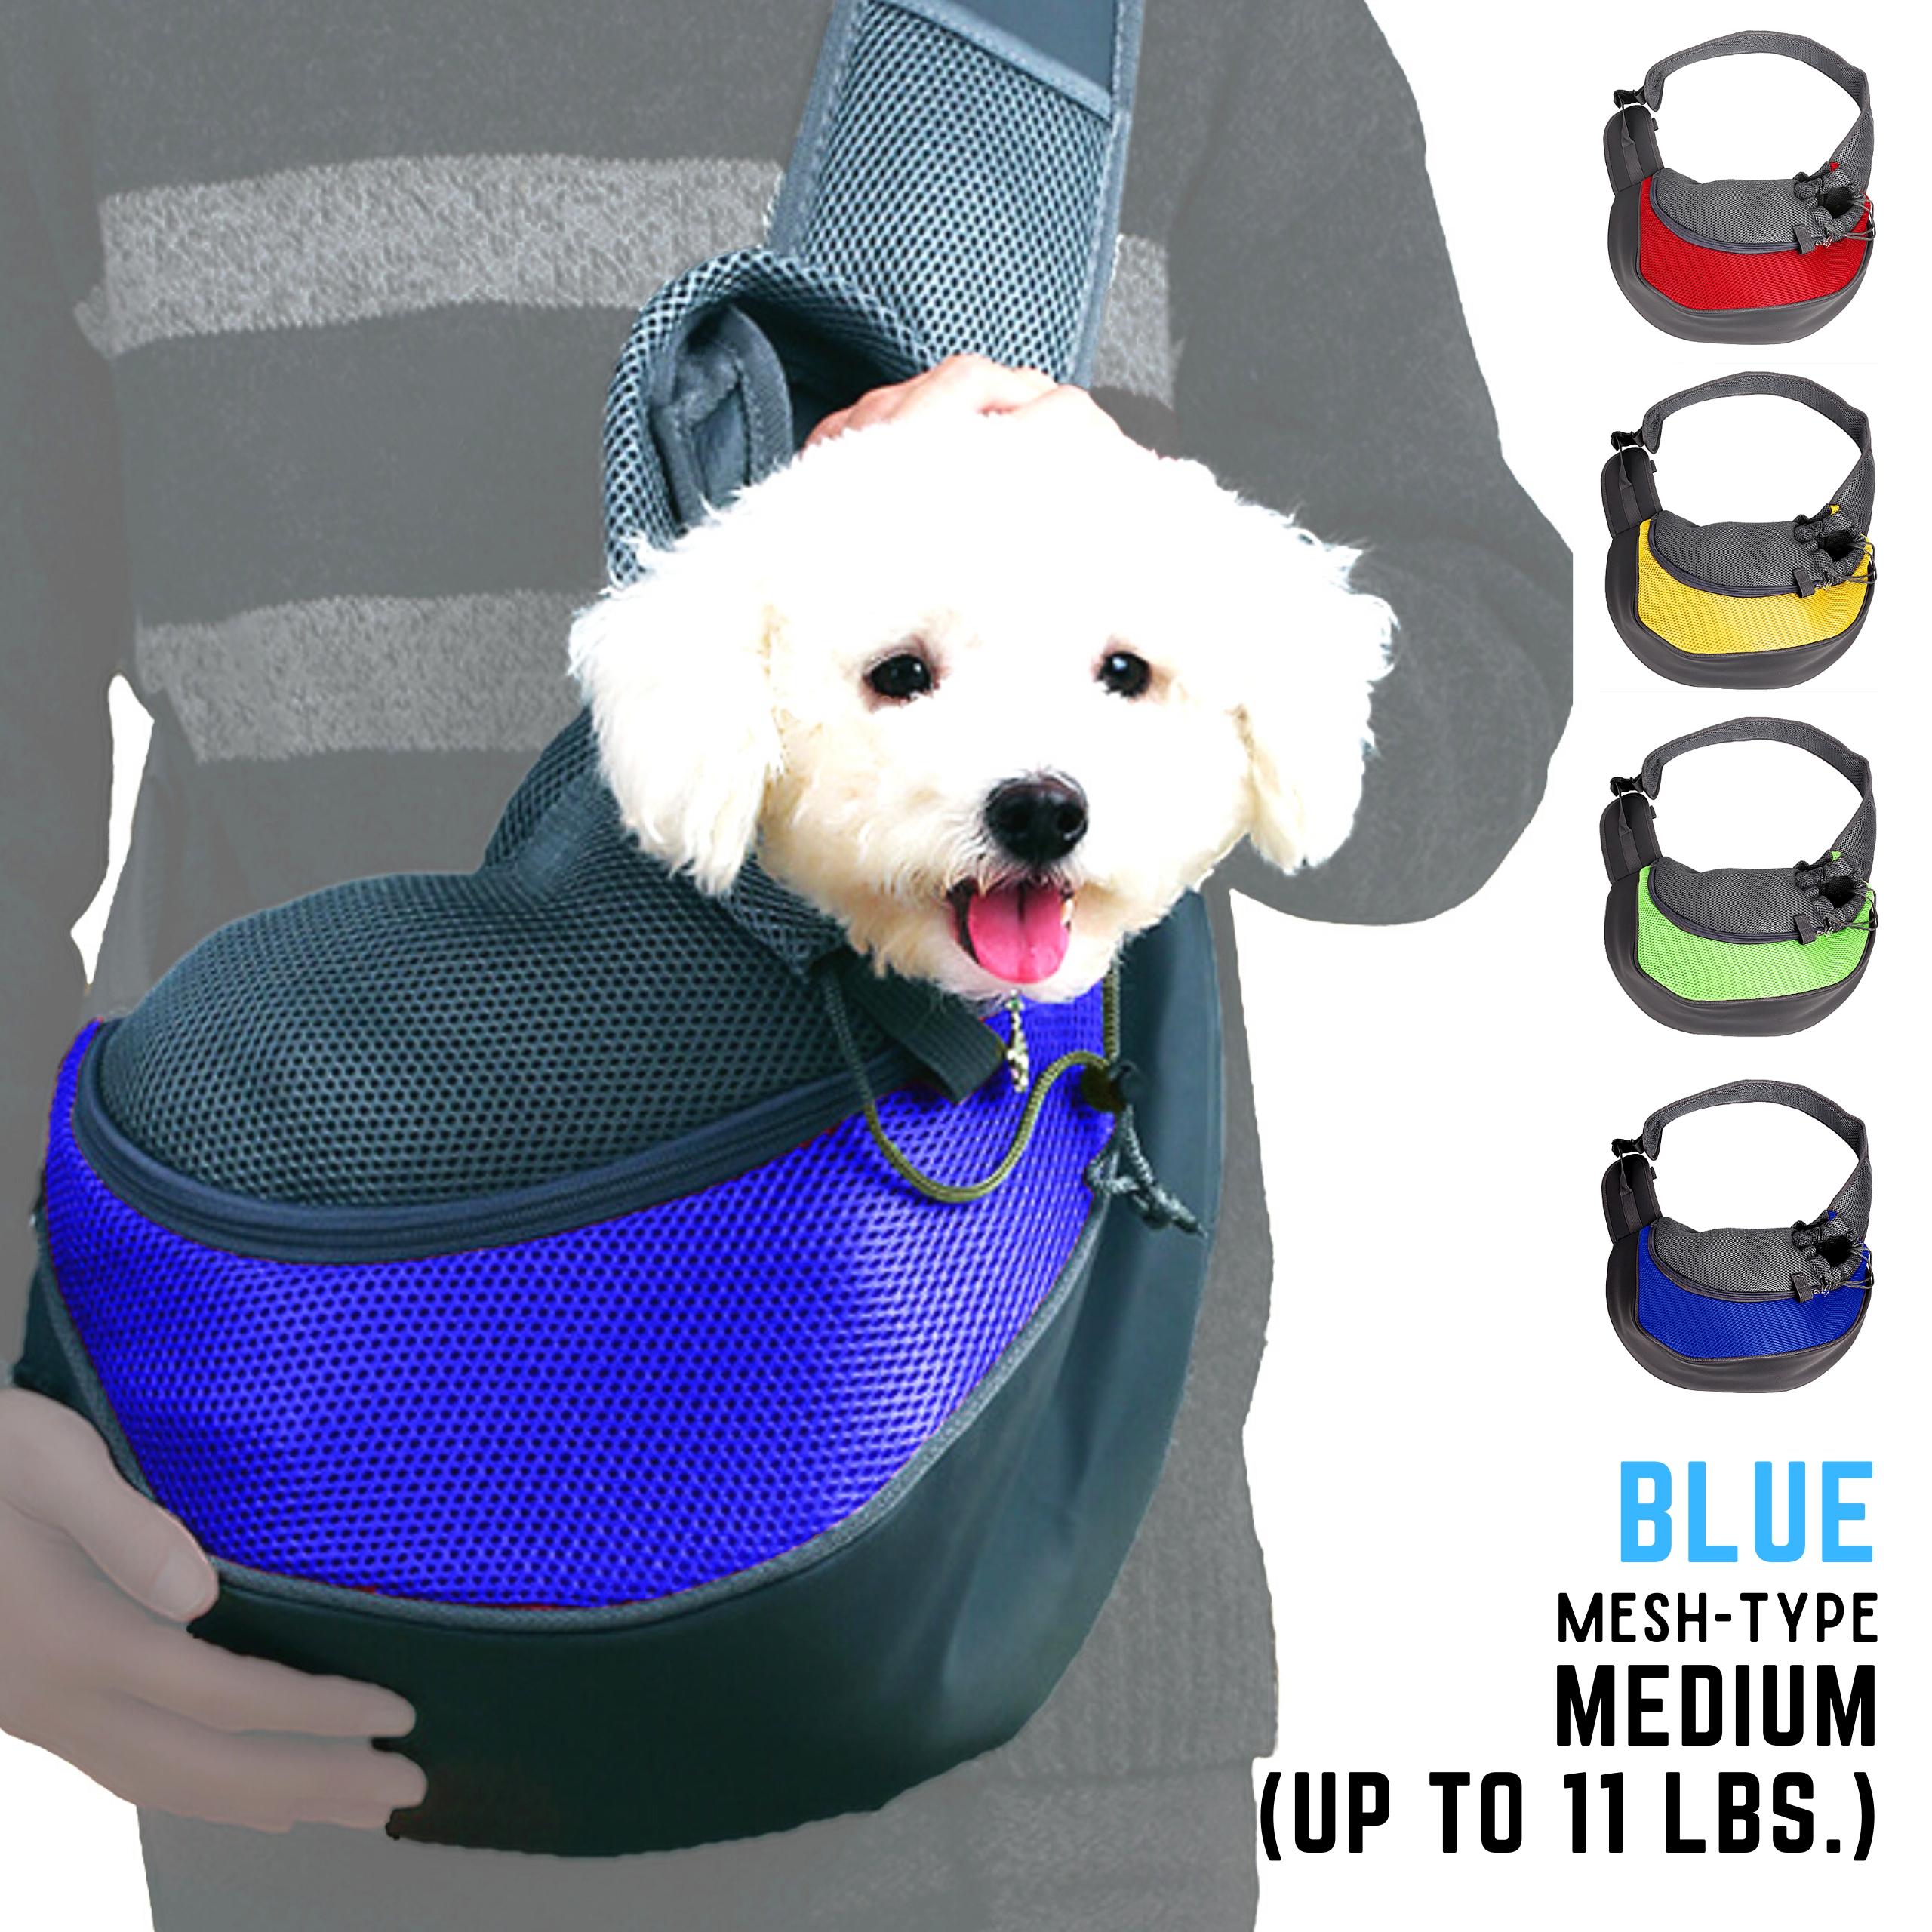 Emperor Pets Pet Sling Carrier Mesh Type, Dog Carrier, Pet Carrier, Blue Color - Image 1 Main